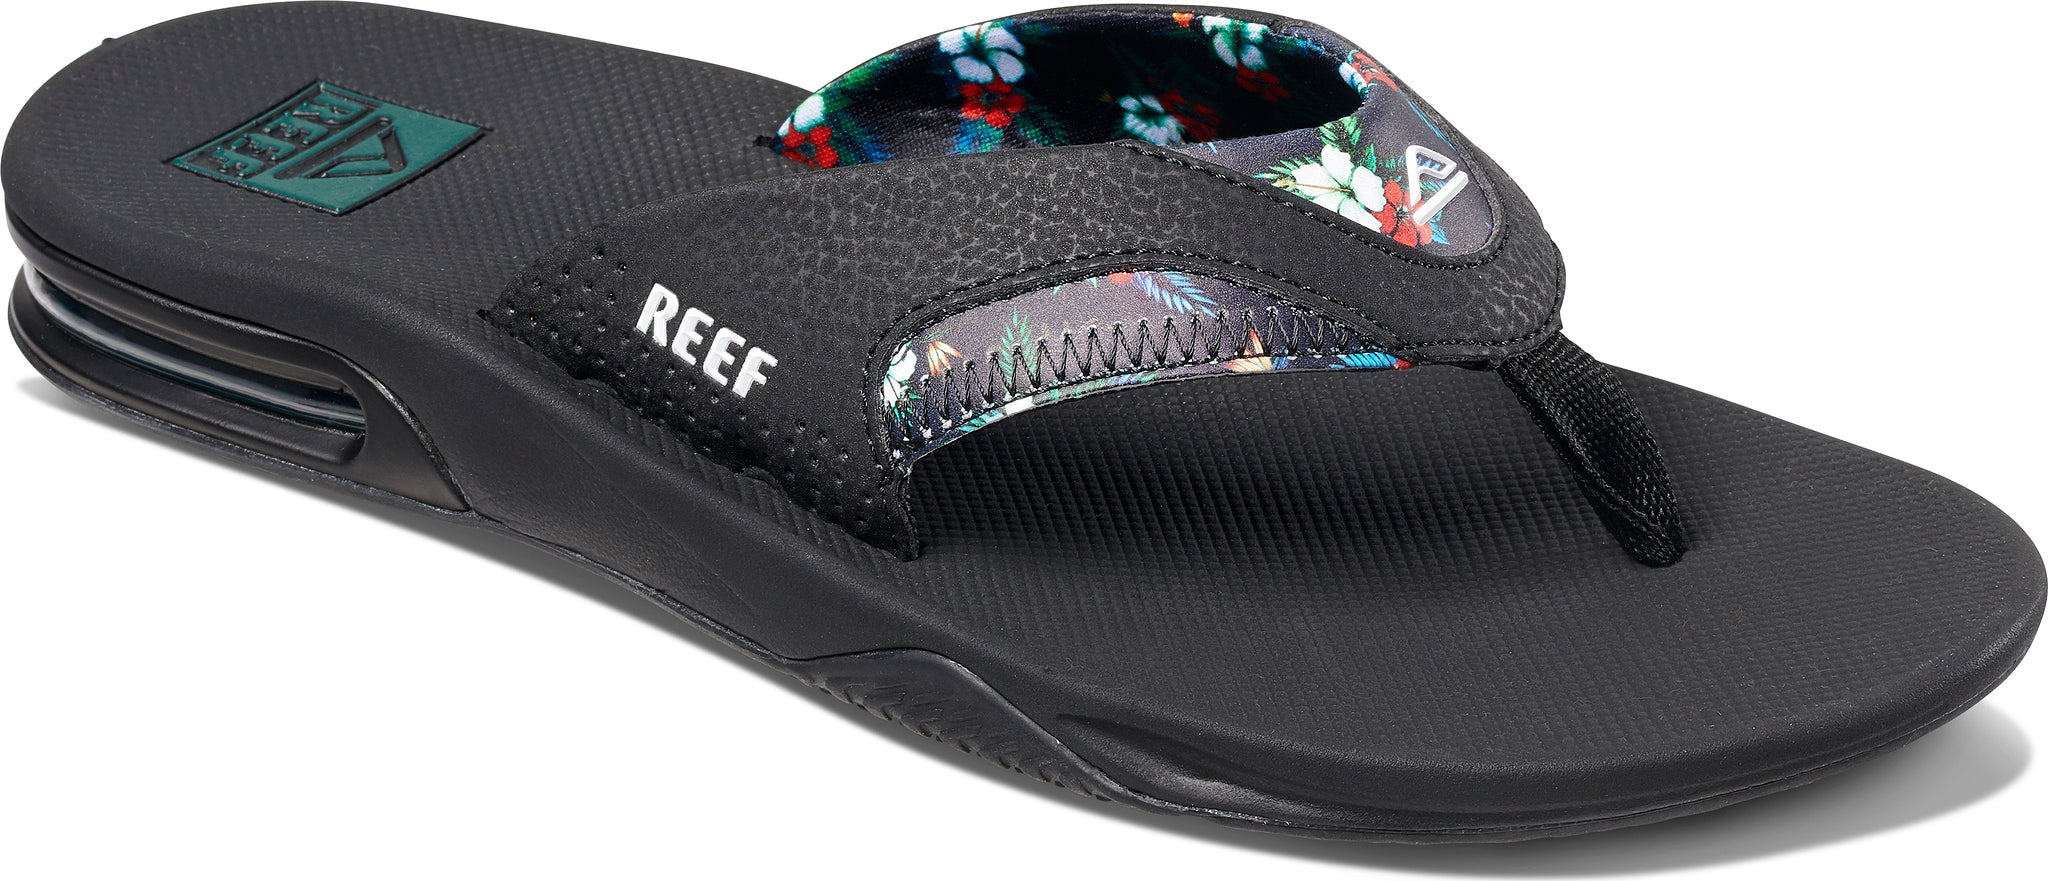 reef men's fanning prints sandal